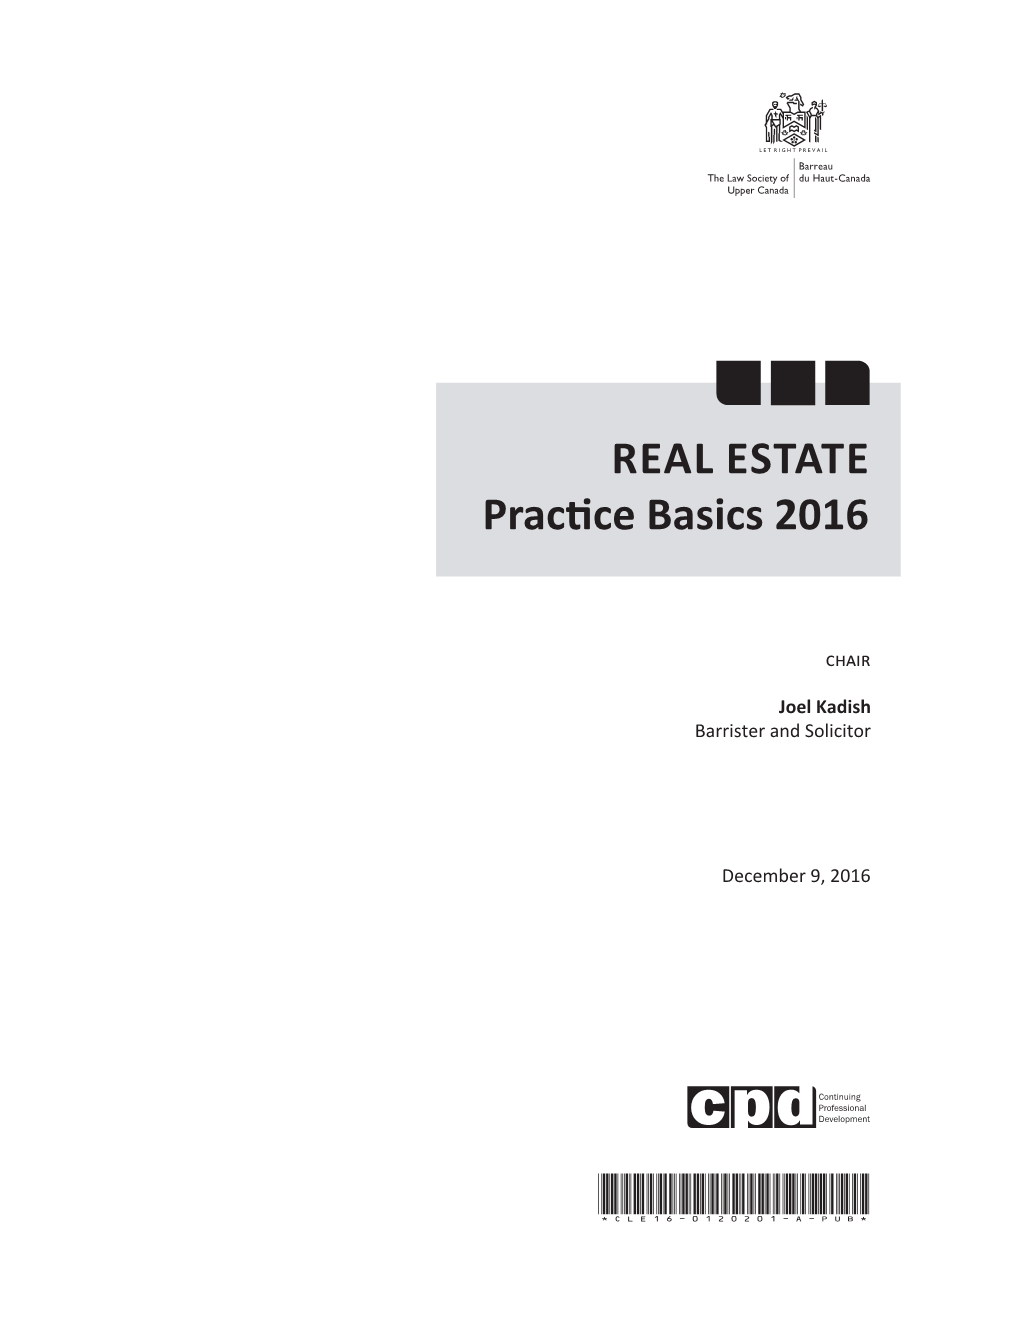 REAL ESTATE Practice Basics 2016